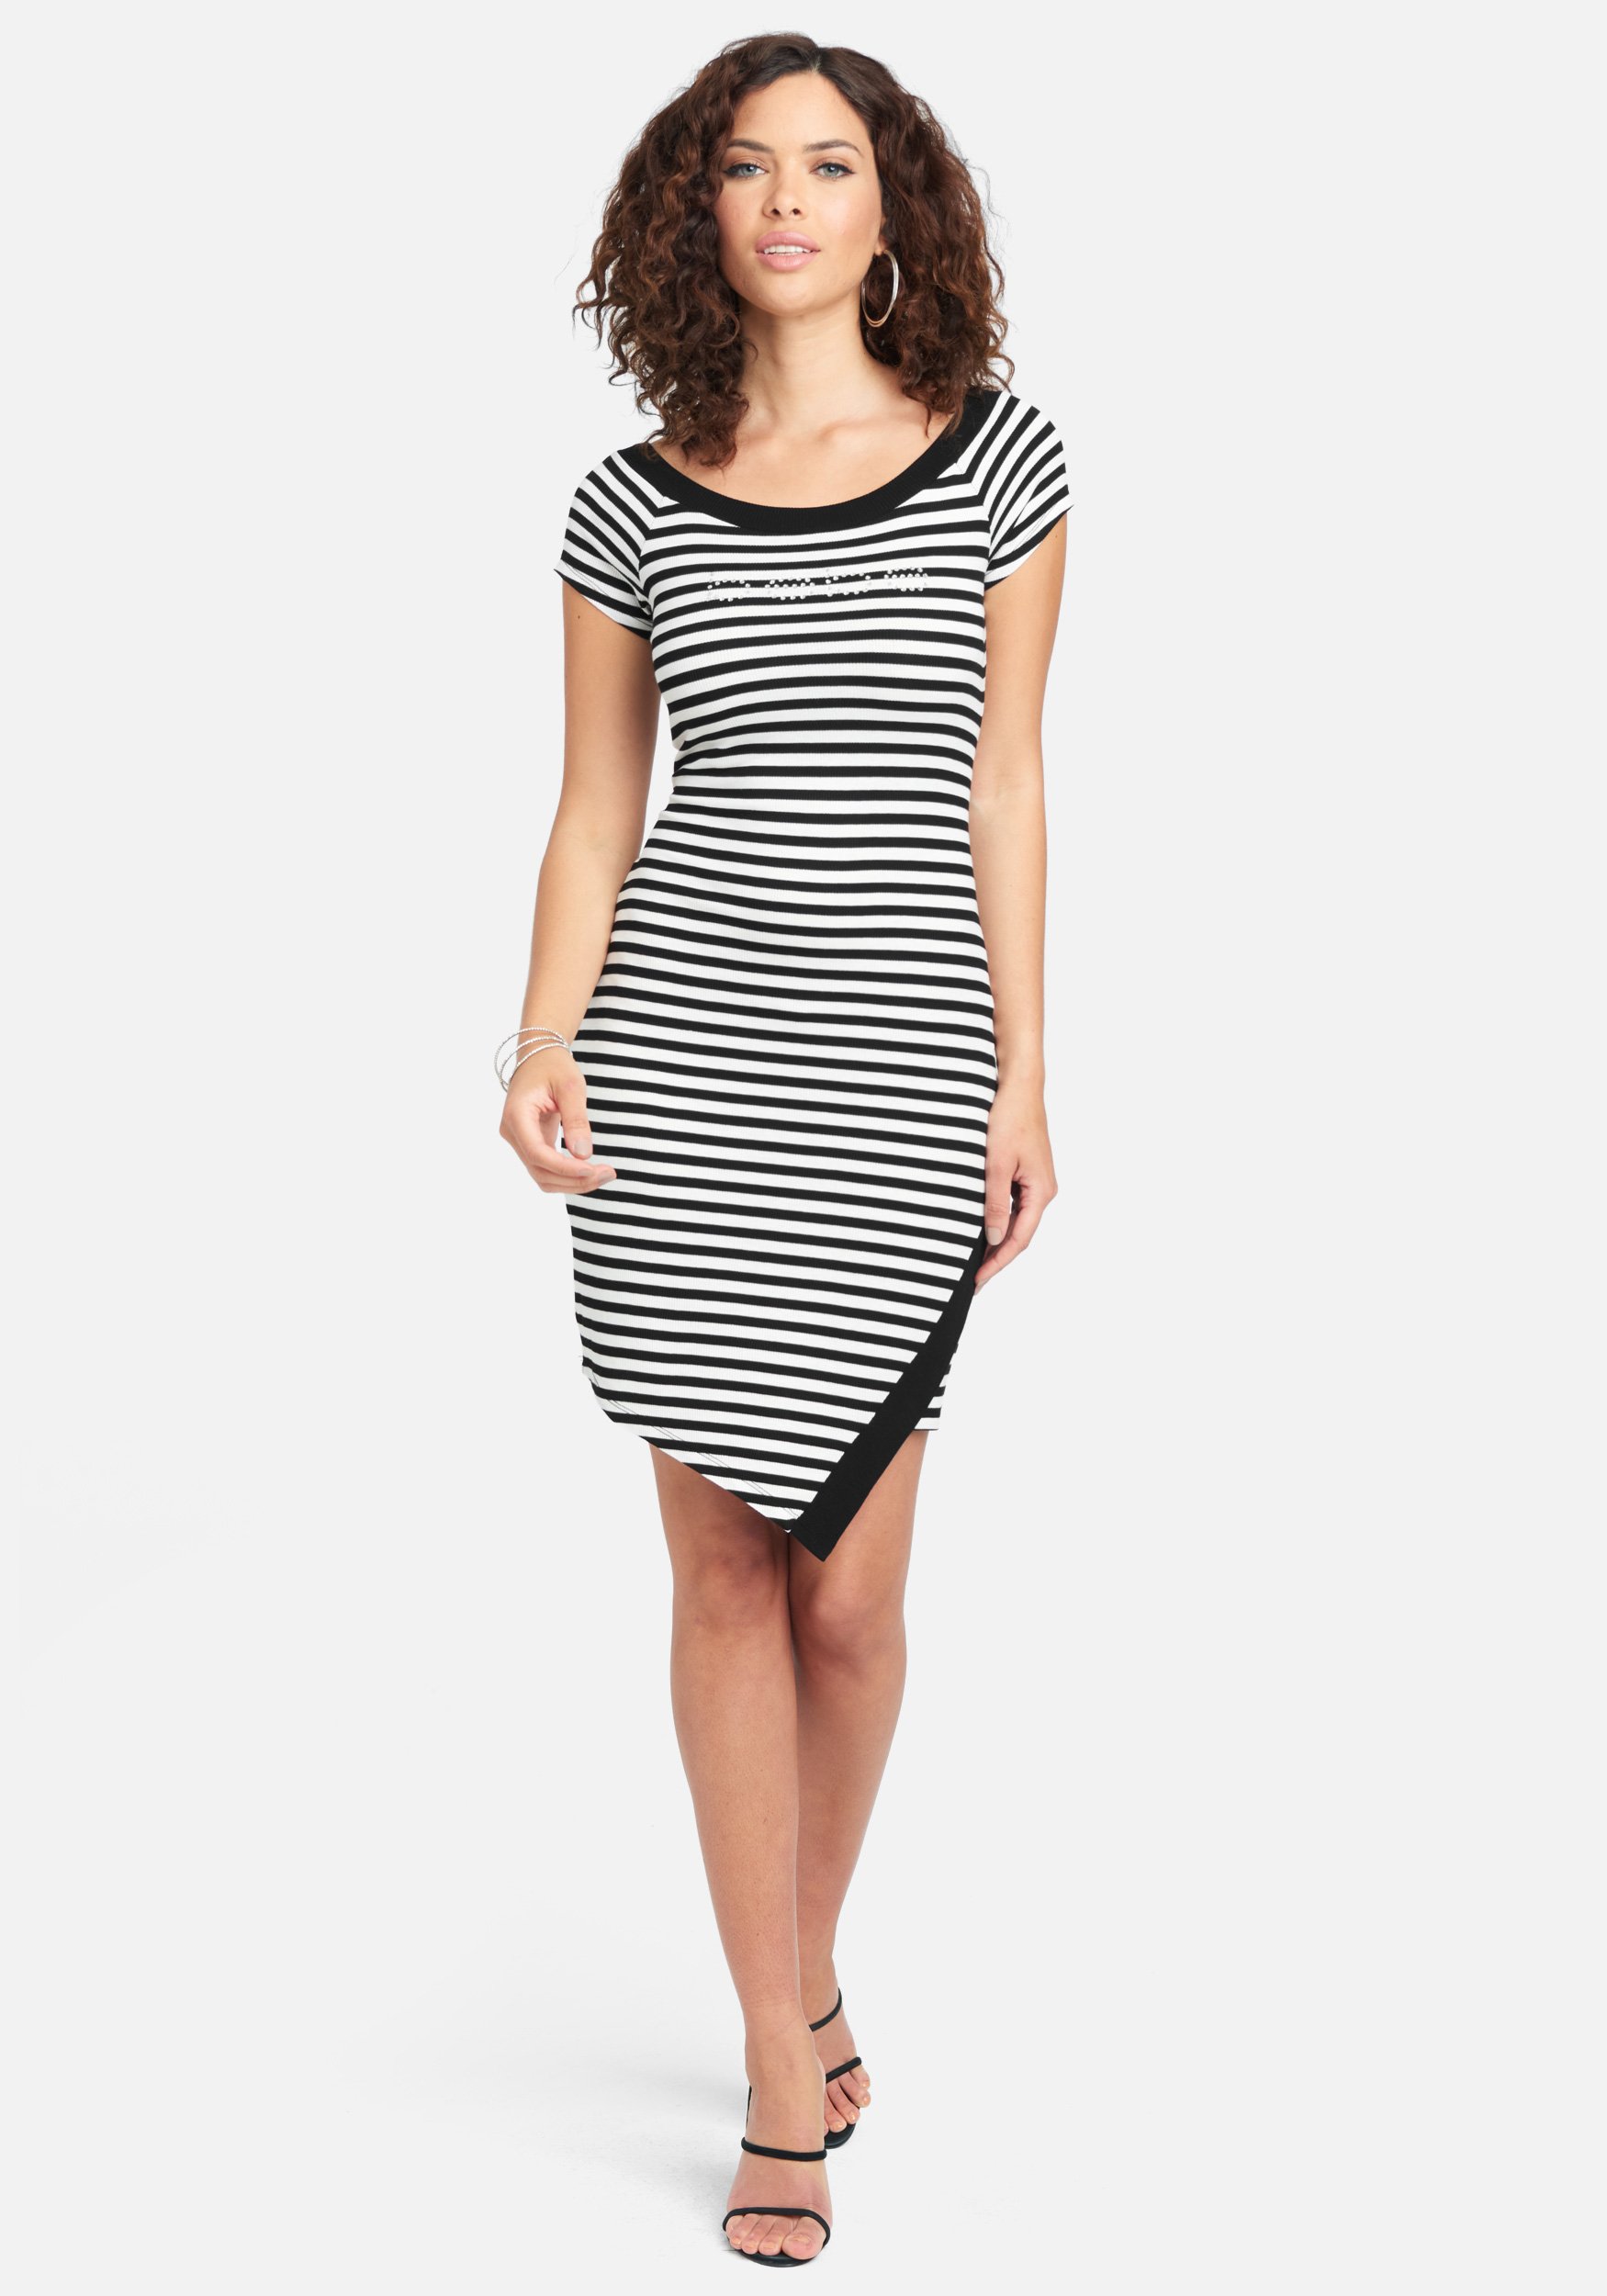 Women's Stripe Bodycon Bebe Logo Dress, Size XL in Black/White Spandex/Nylon